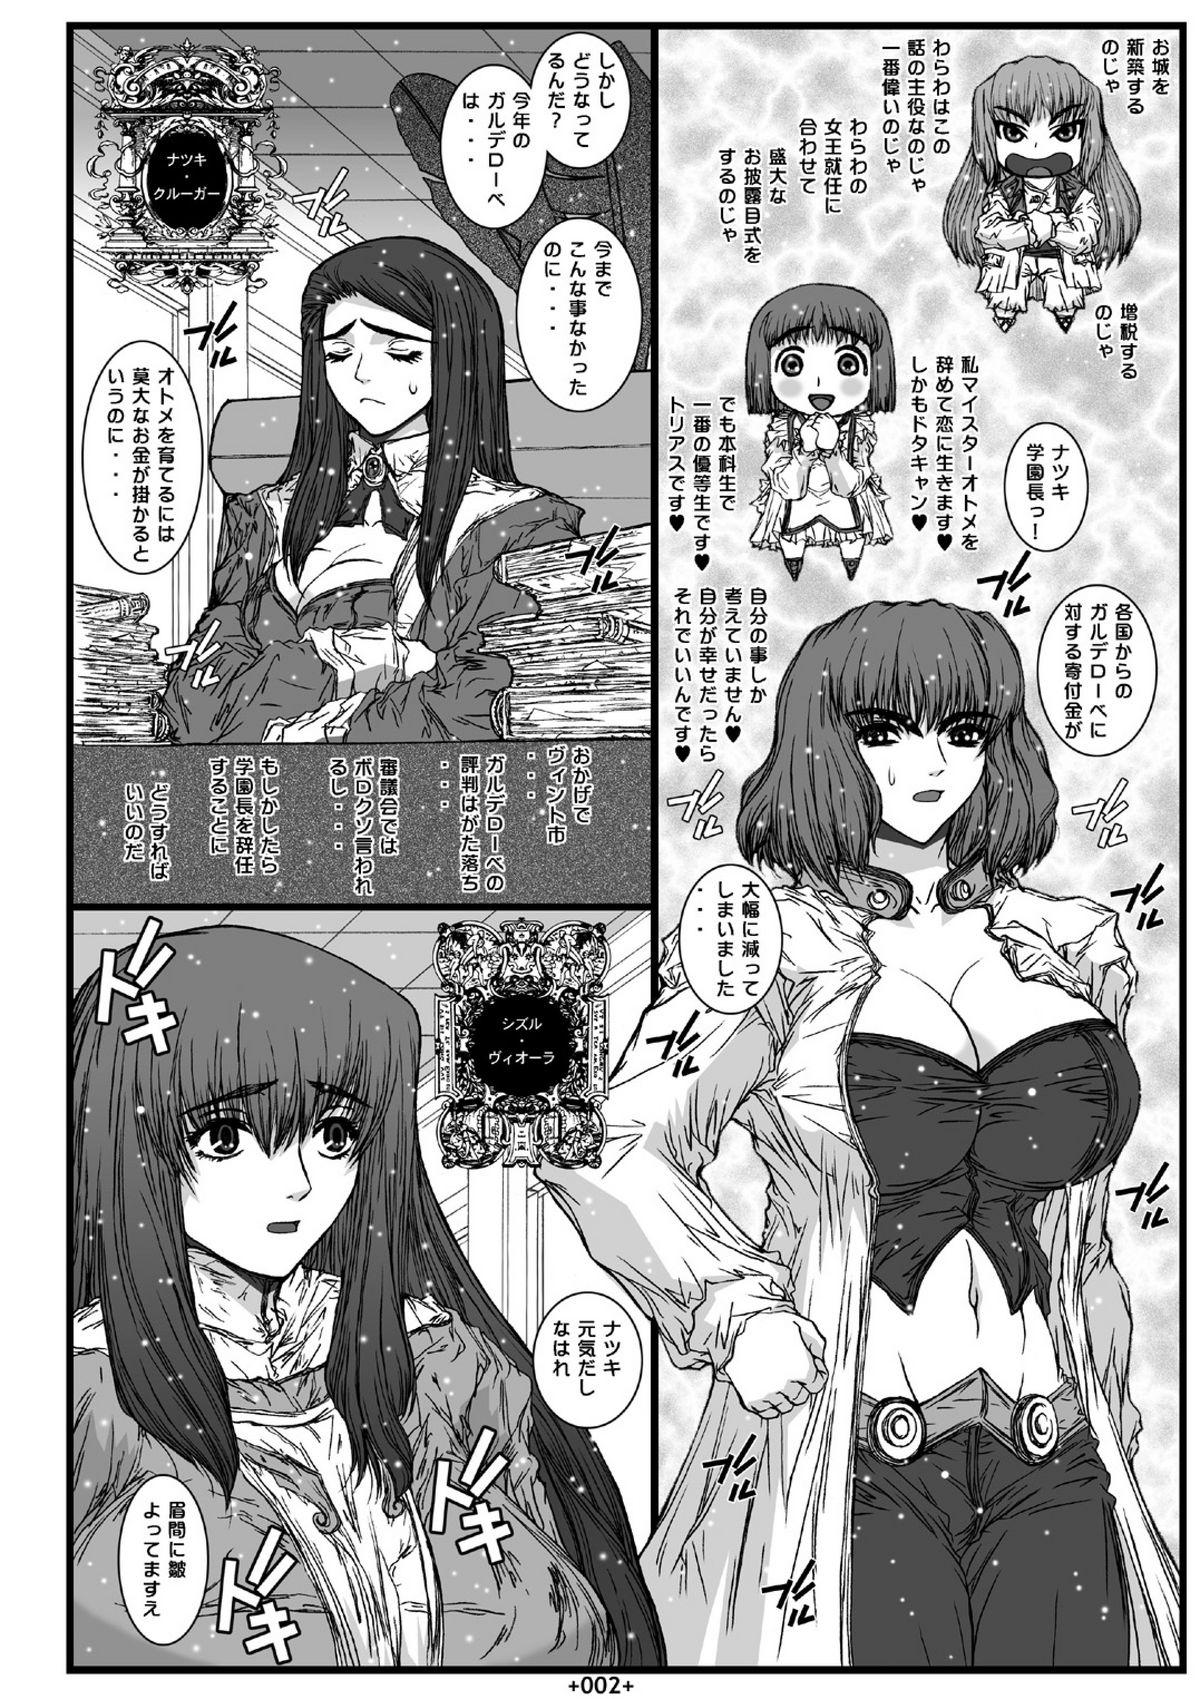 Orgy Mai-In 2 - Mai-otome Girls - Page 4